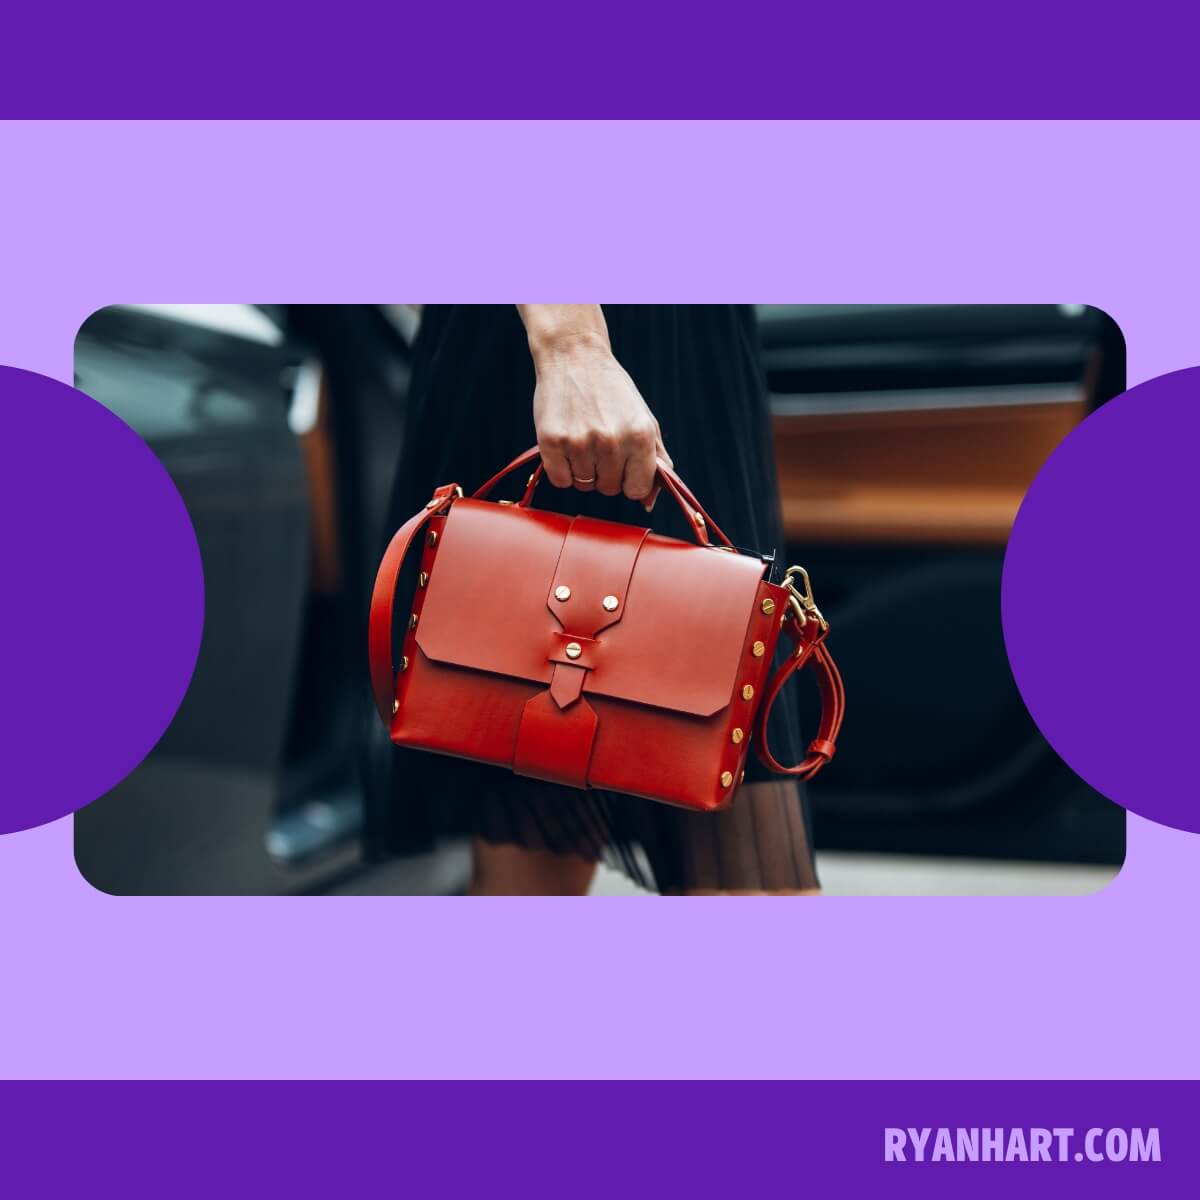 Woman carrying red handbag